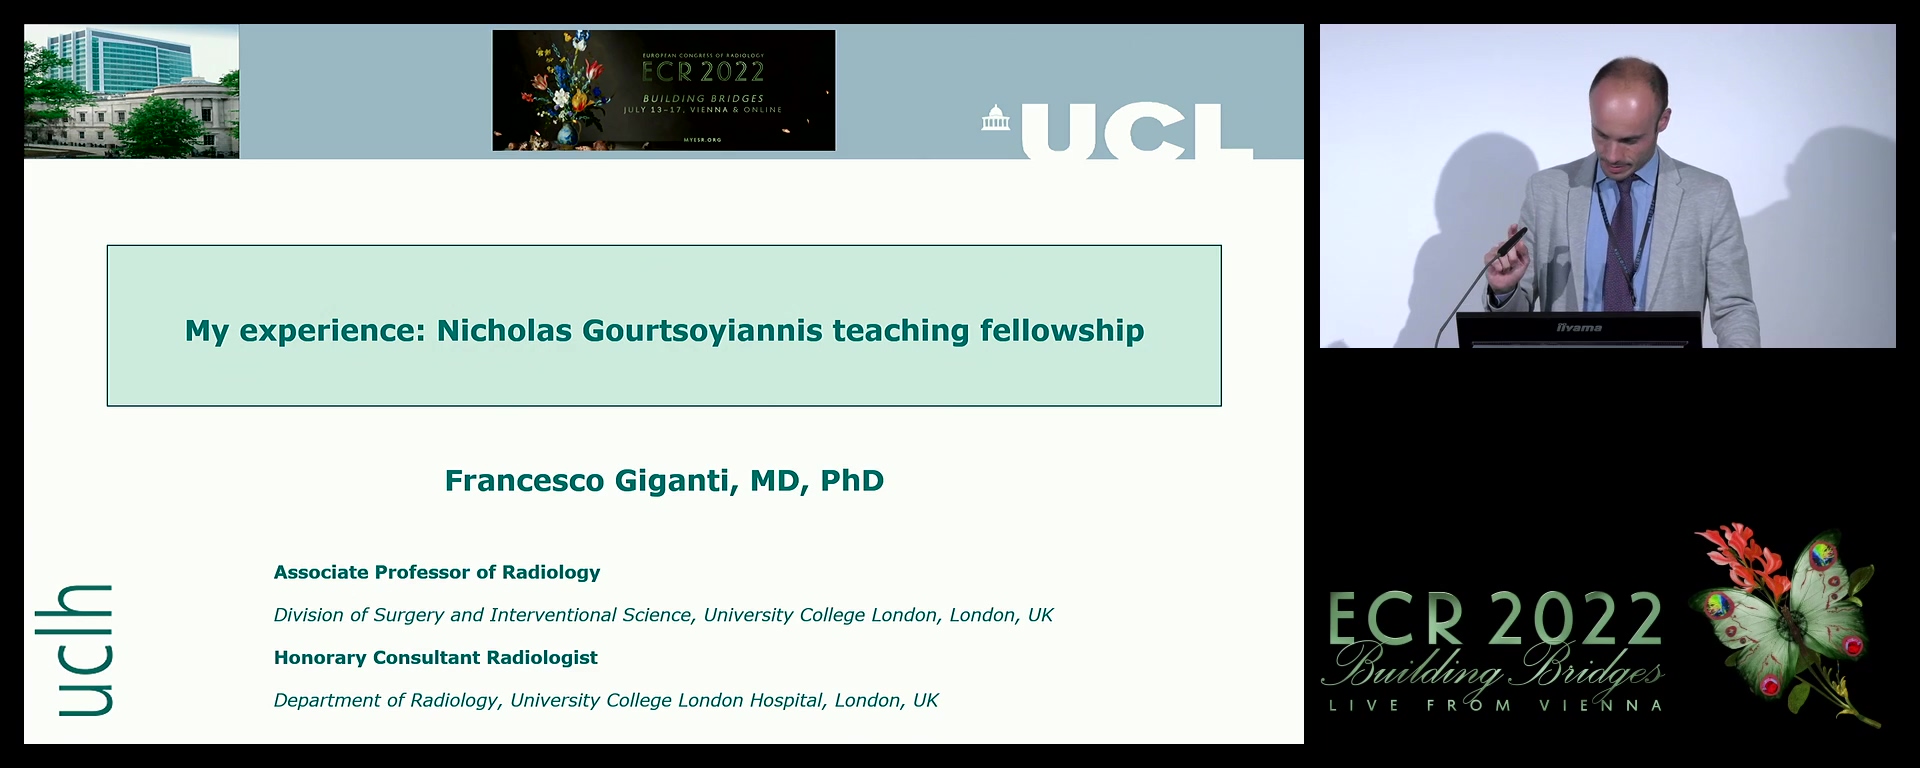 My experience: Nicholas Gourtsoyiannis teaching fellowship - Francesco Giganti, London / UK